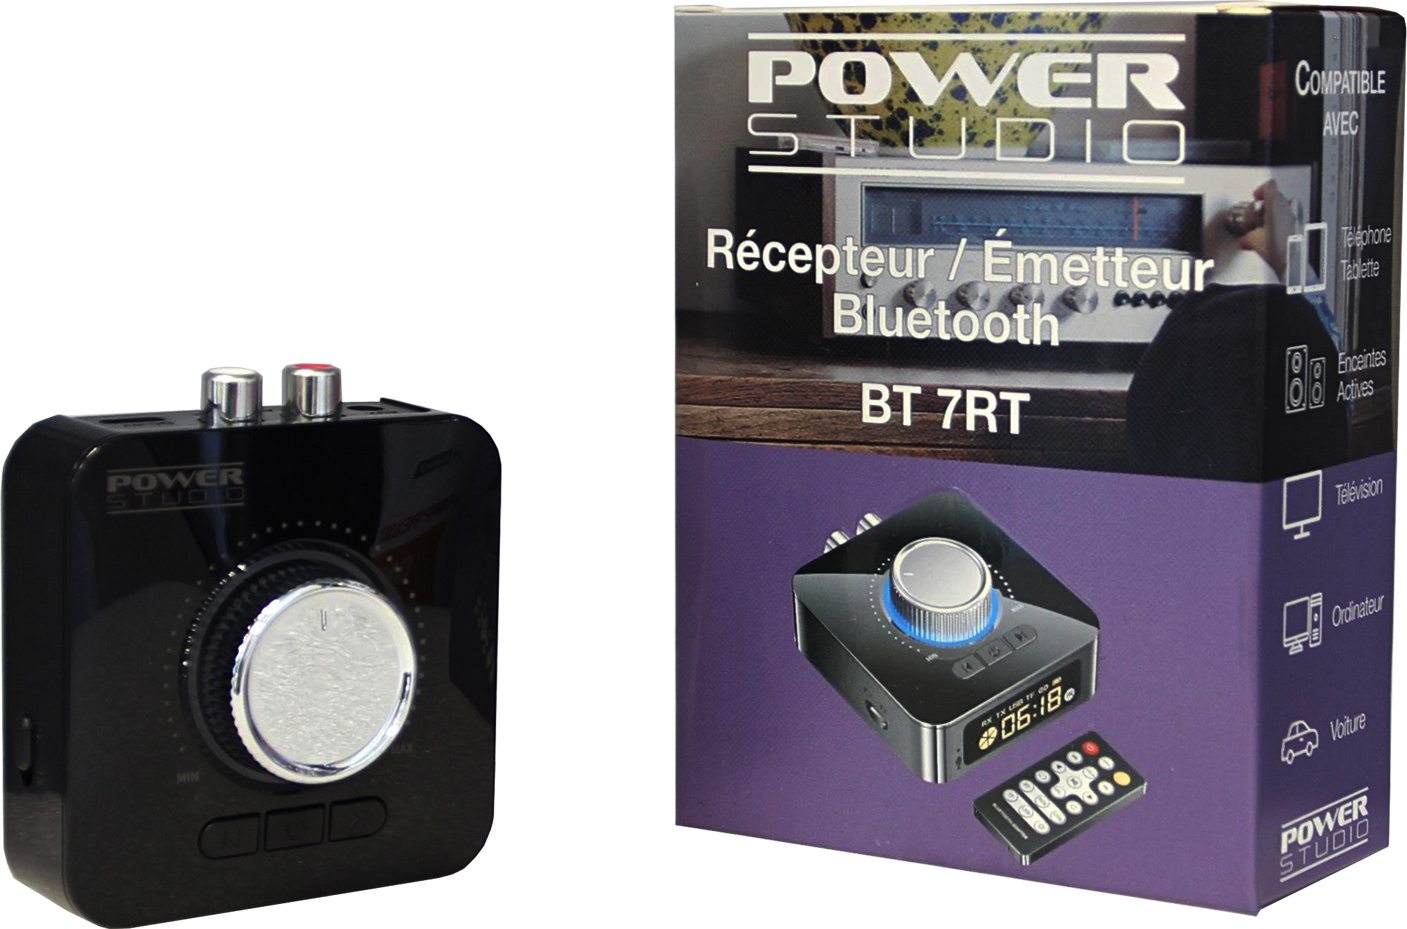 Power studio BT 7RT Wireless system for loudspeakers